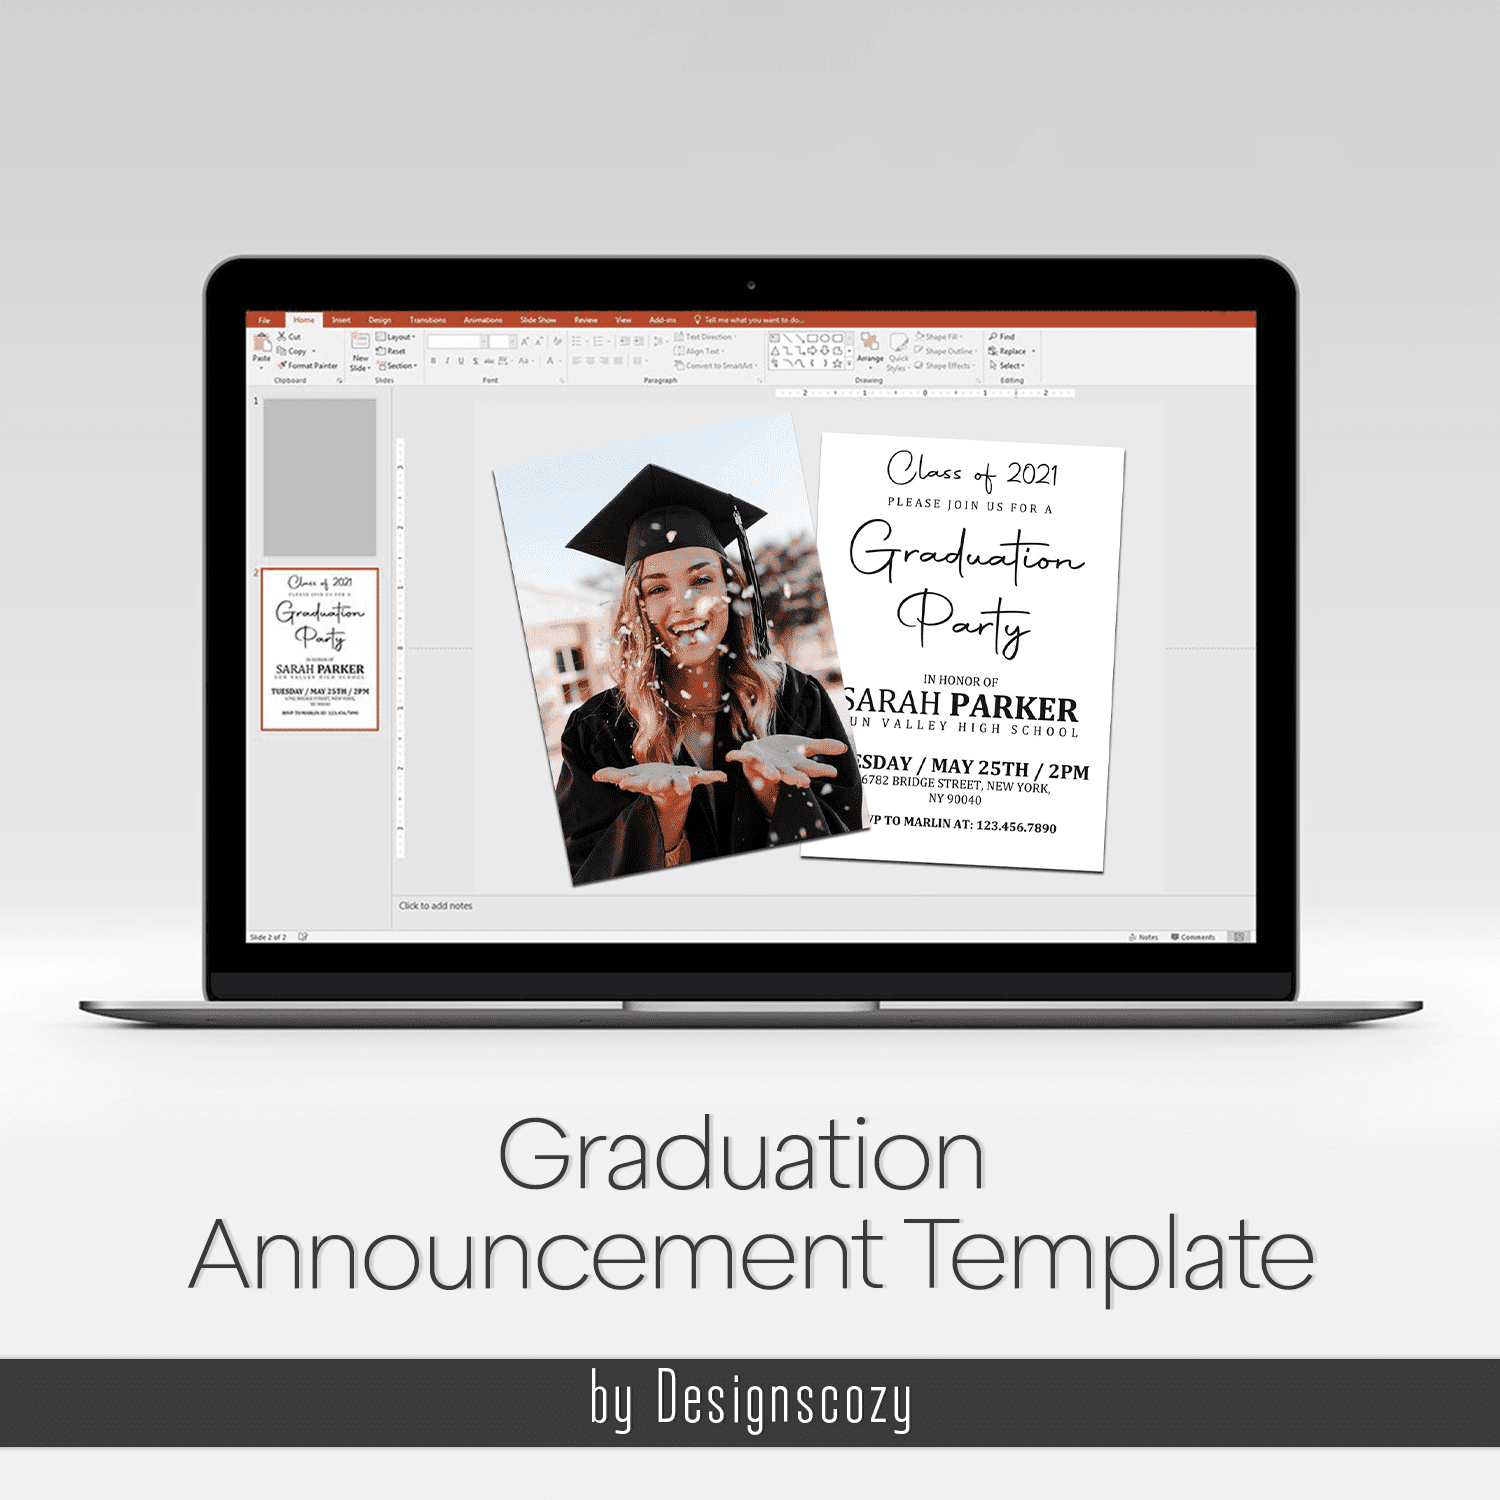 Graduation Announcement Template cover.